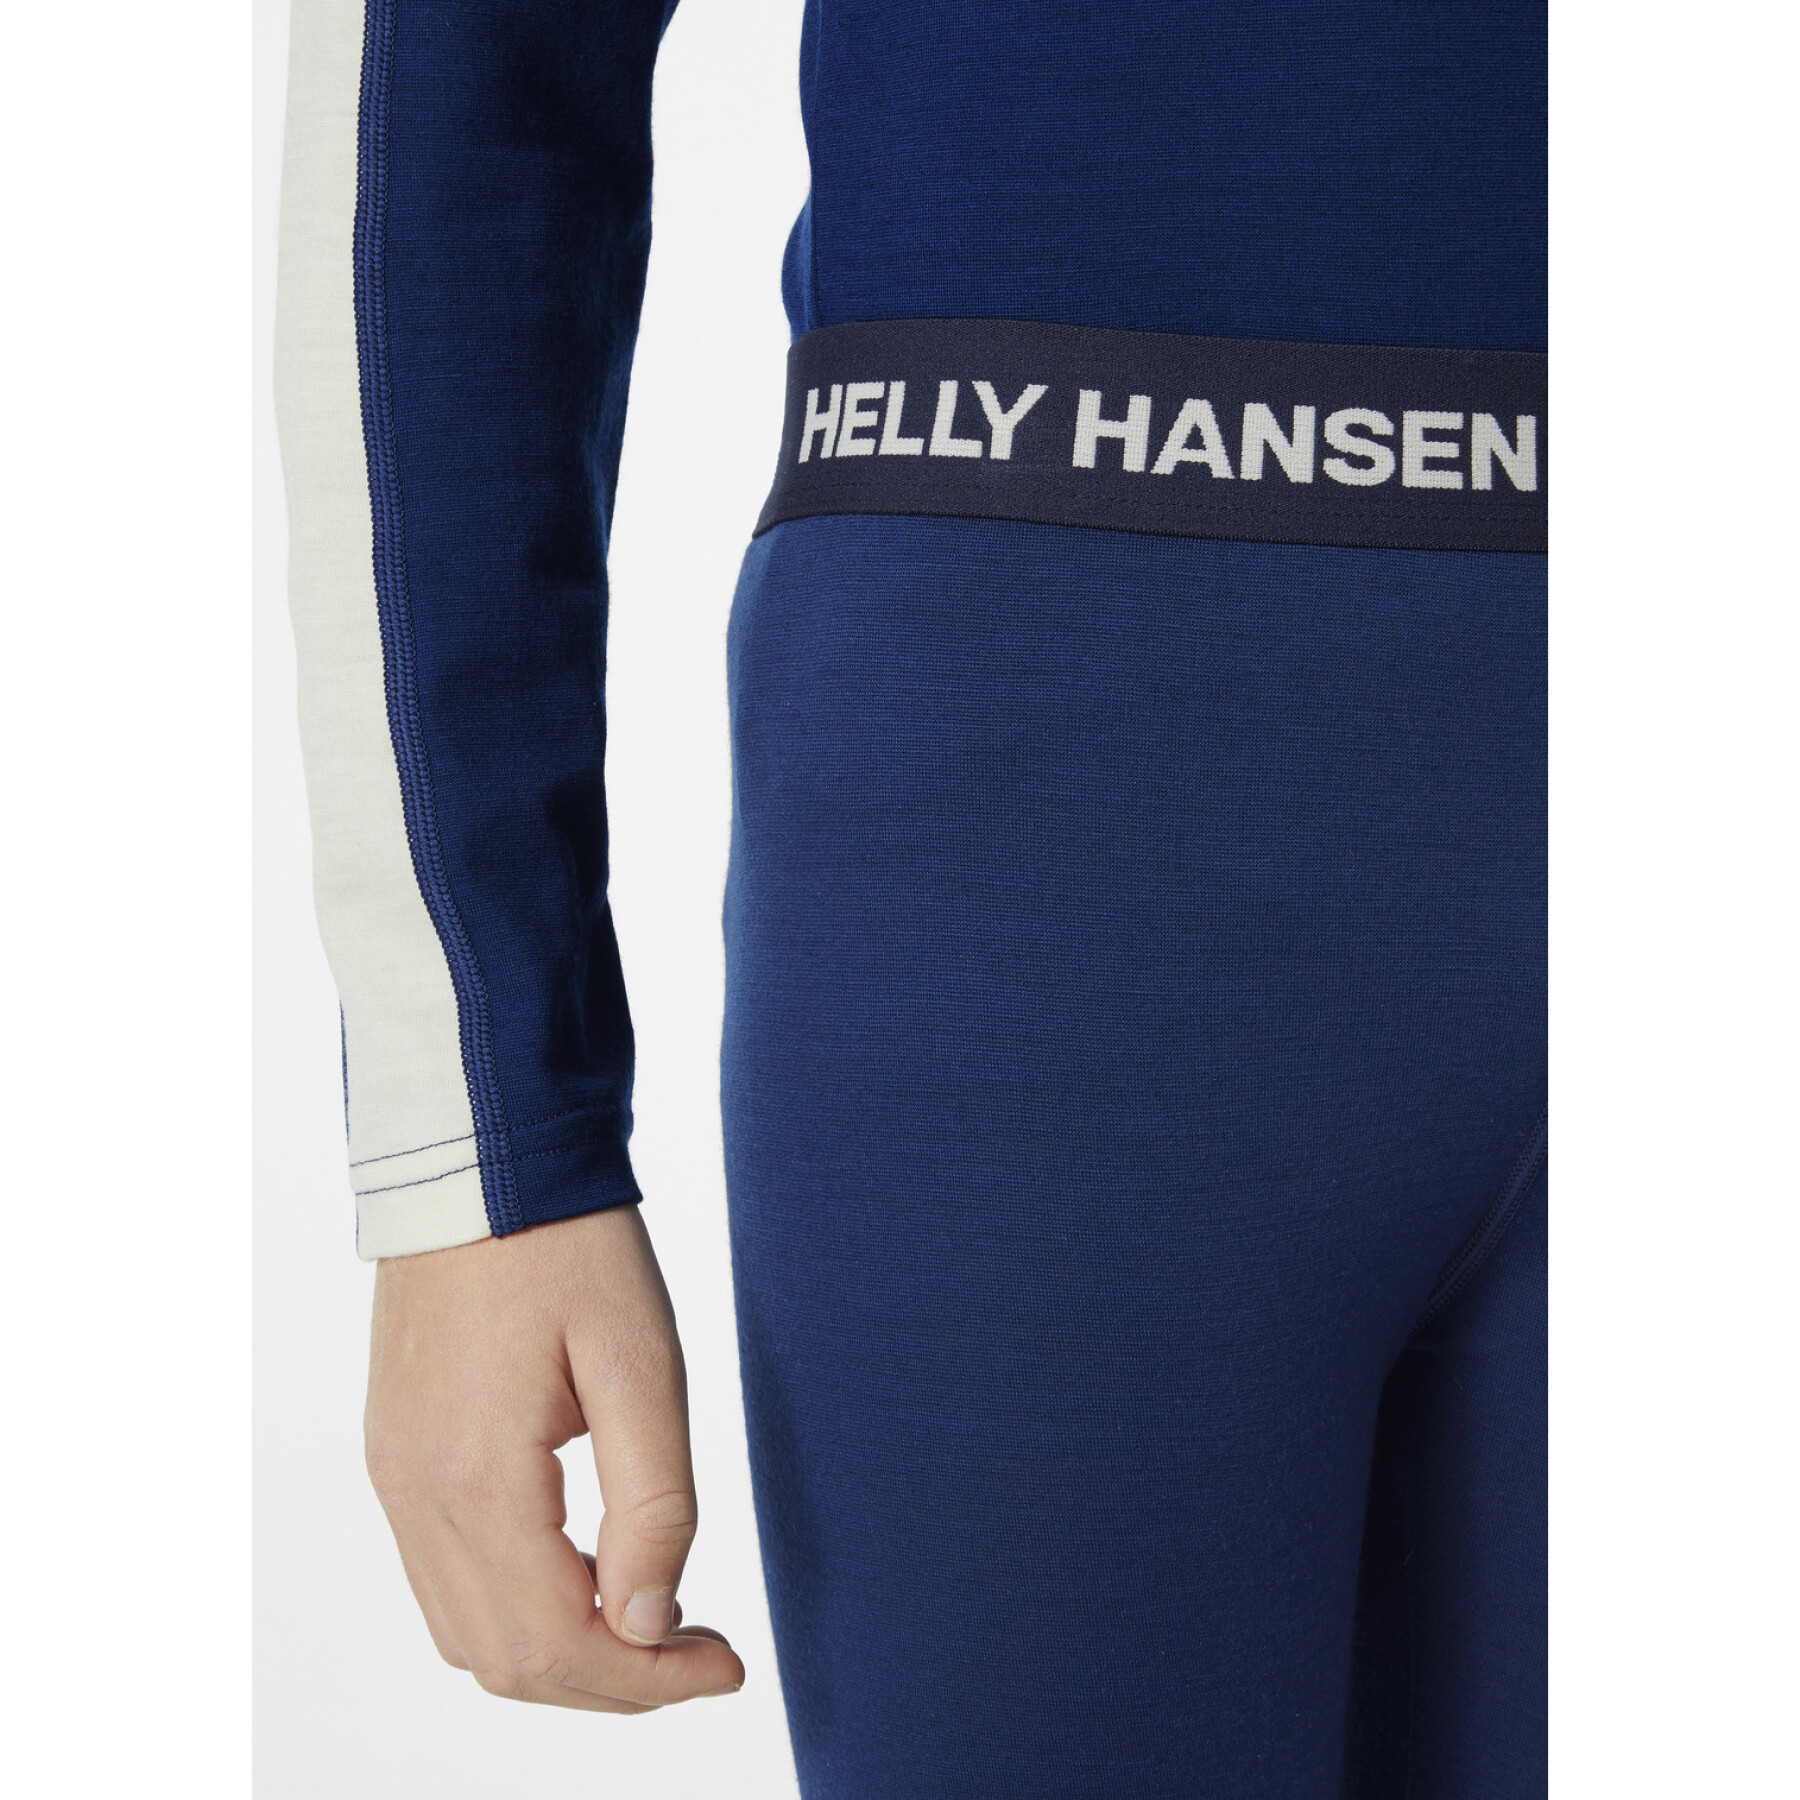 Completo sportivo in lana merino per bambini Helly Hansen